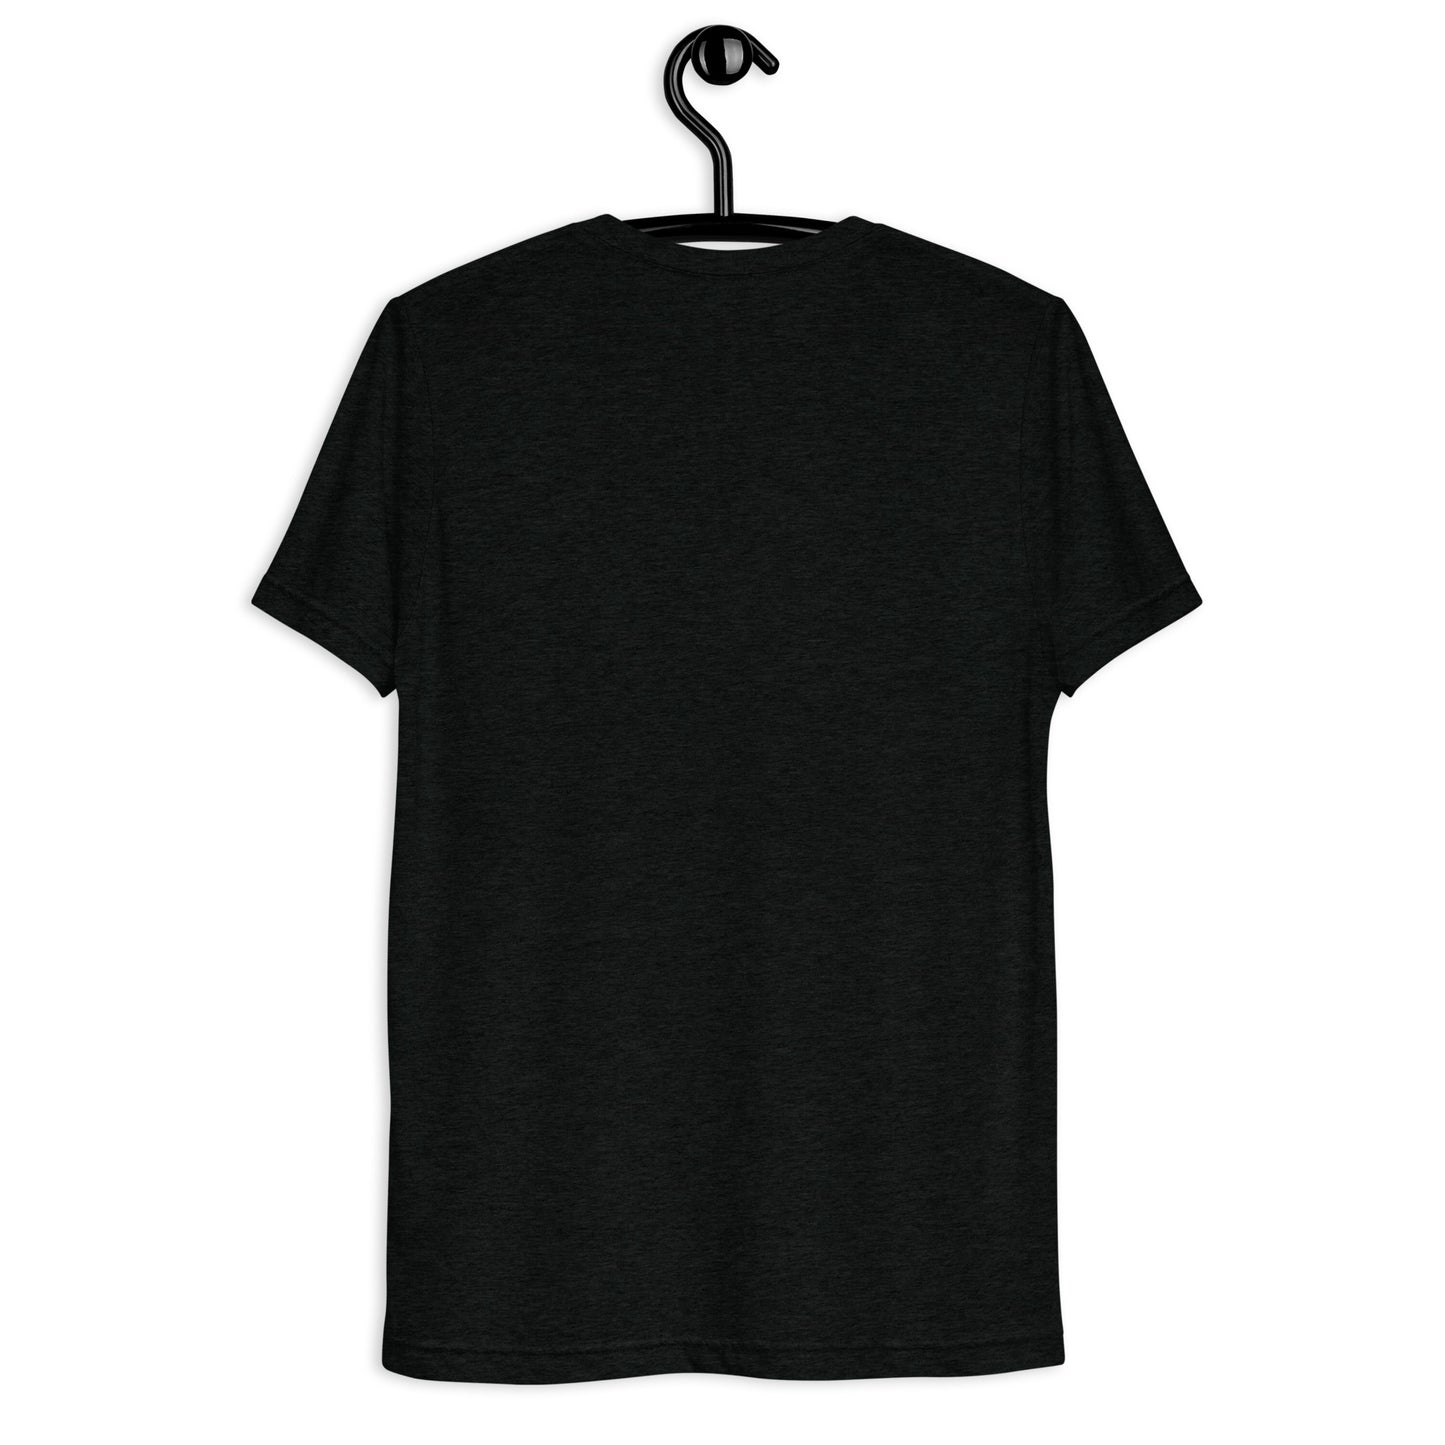 Elevated Equestrian Black Unisex Short Sleeve T-shirt